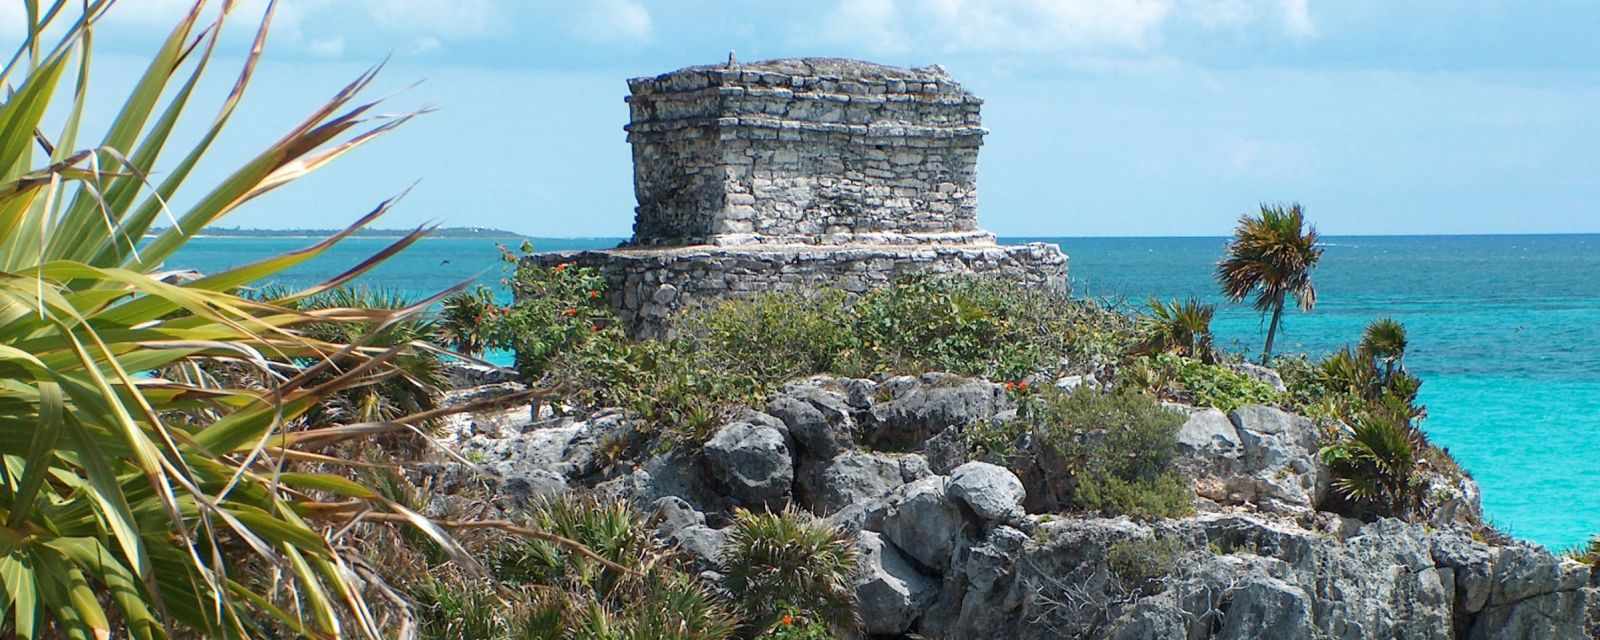 Tulum on the Yucatan Peninsula